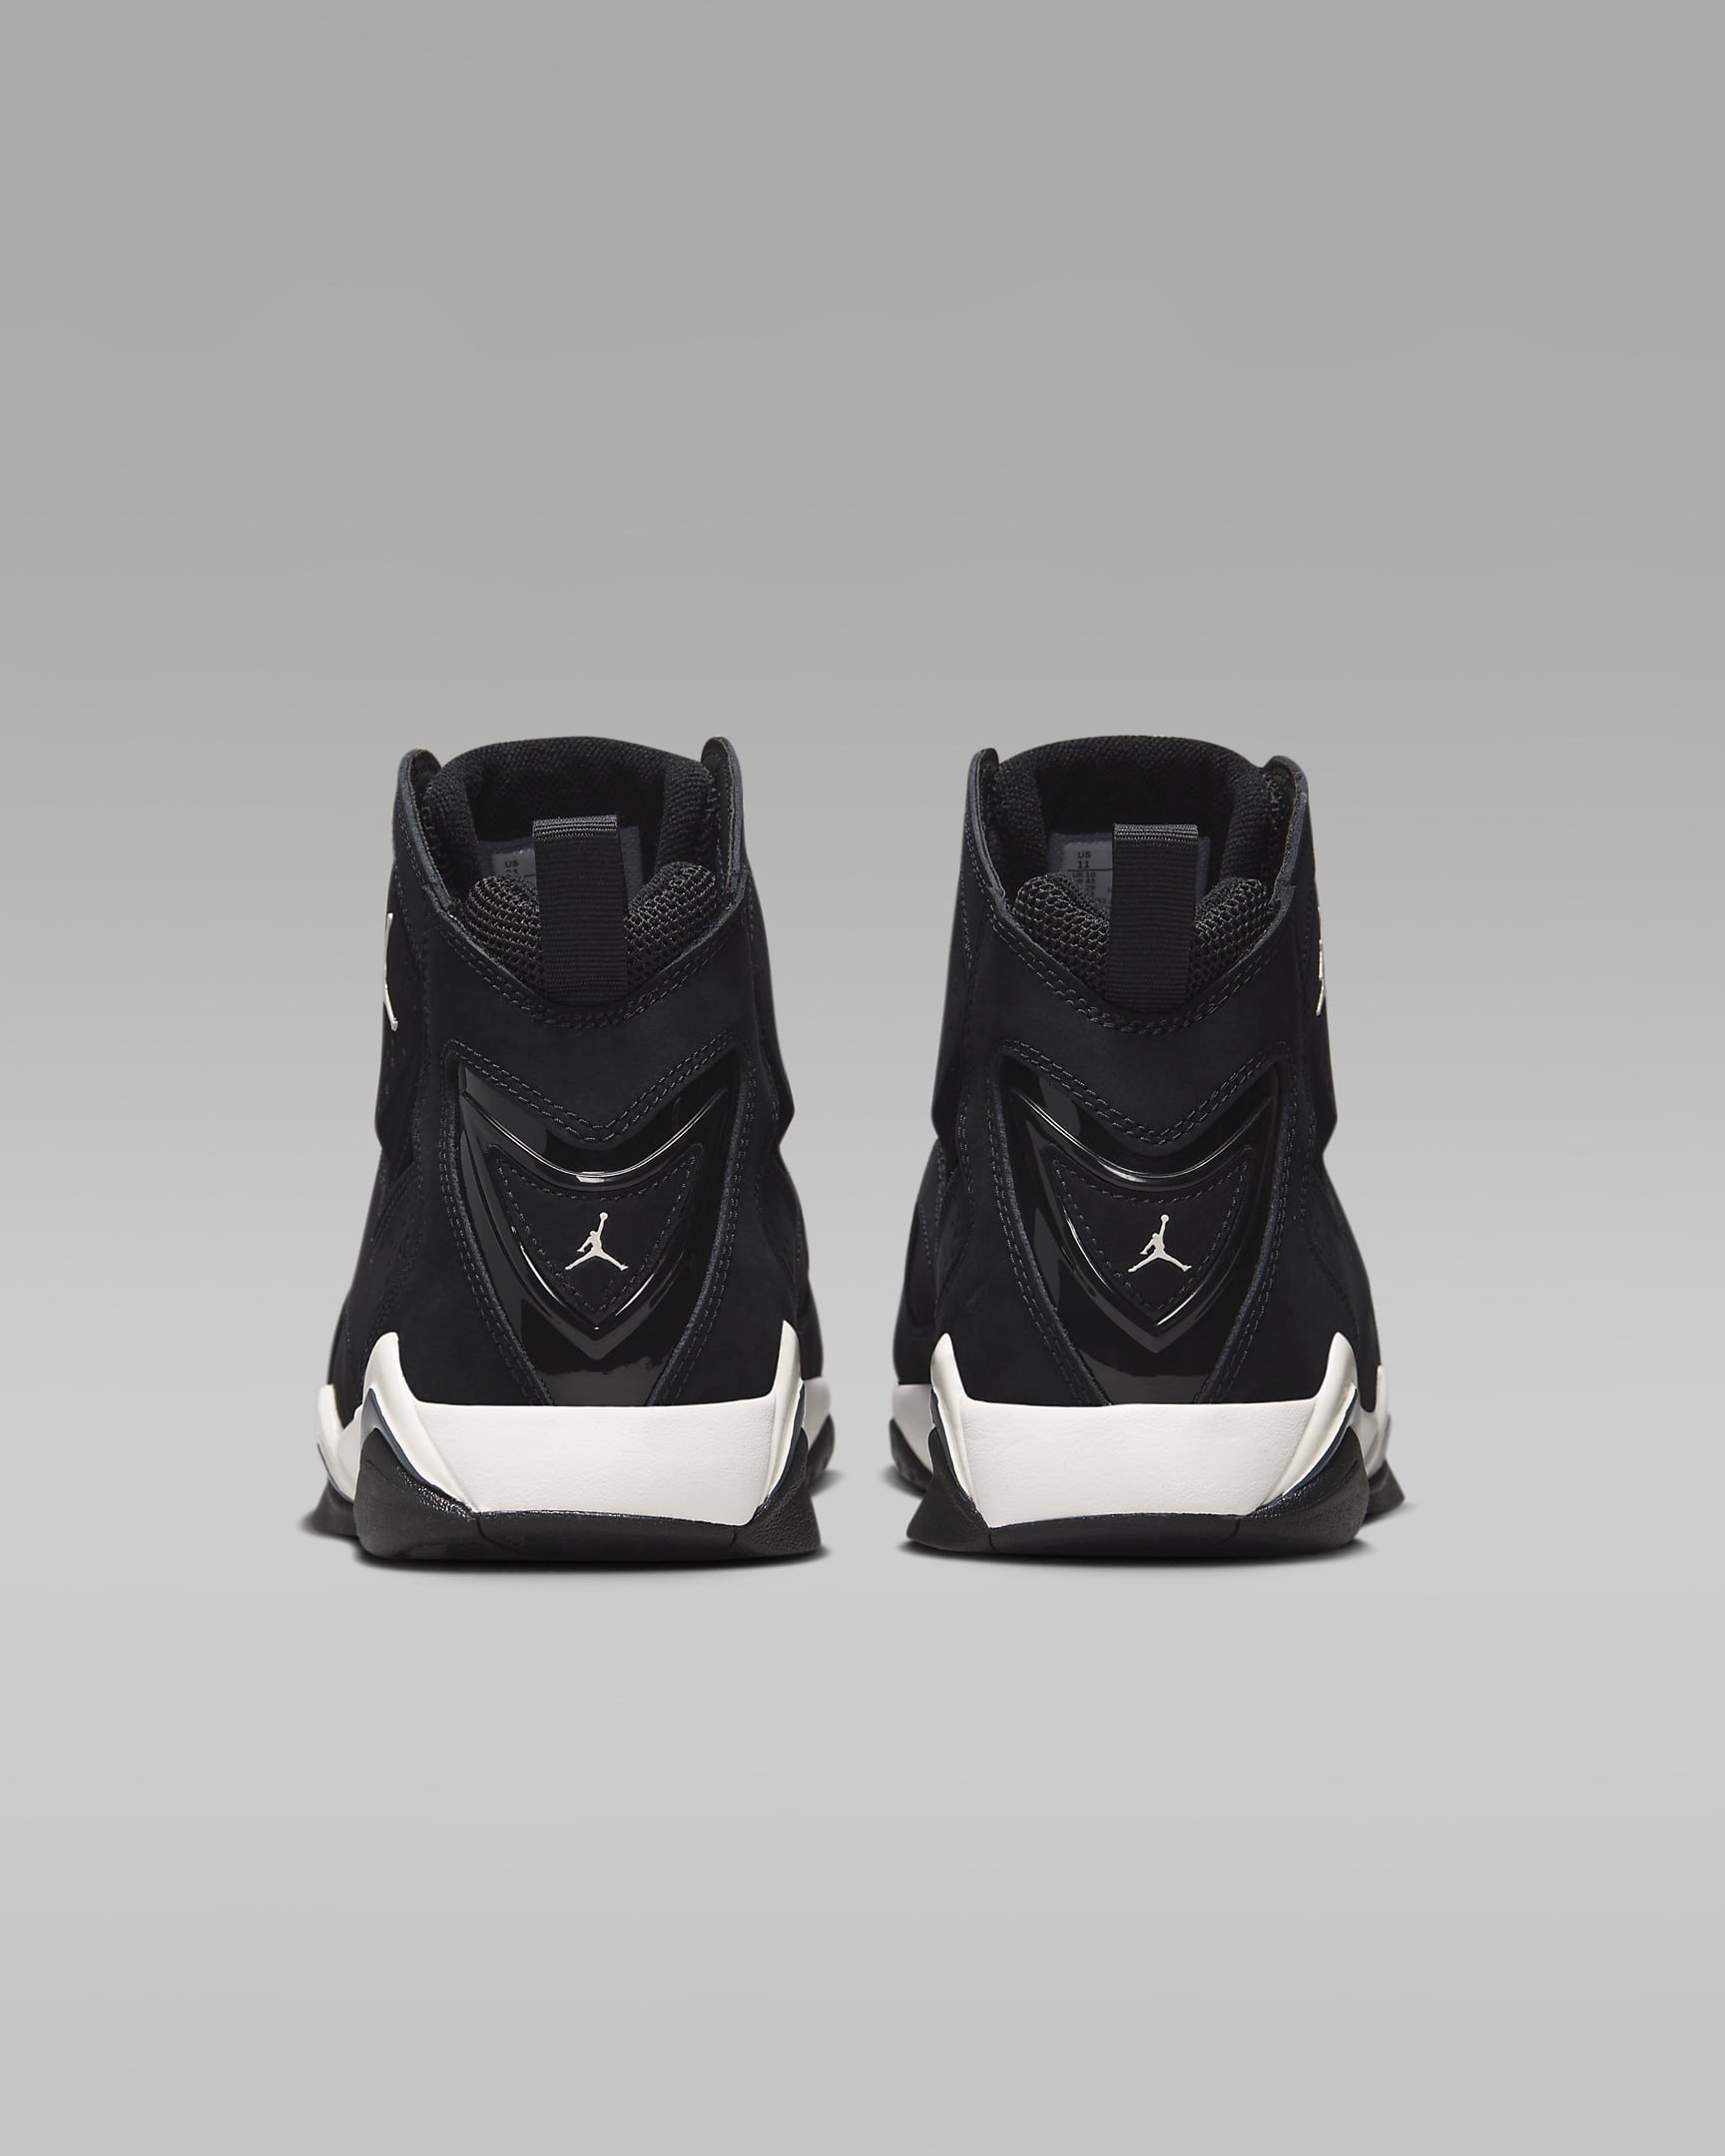 Jordan True Flight Men's Shoes - Black/Anthracite/Phantom